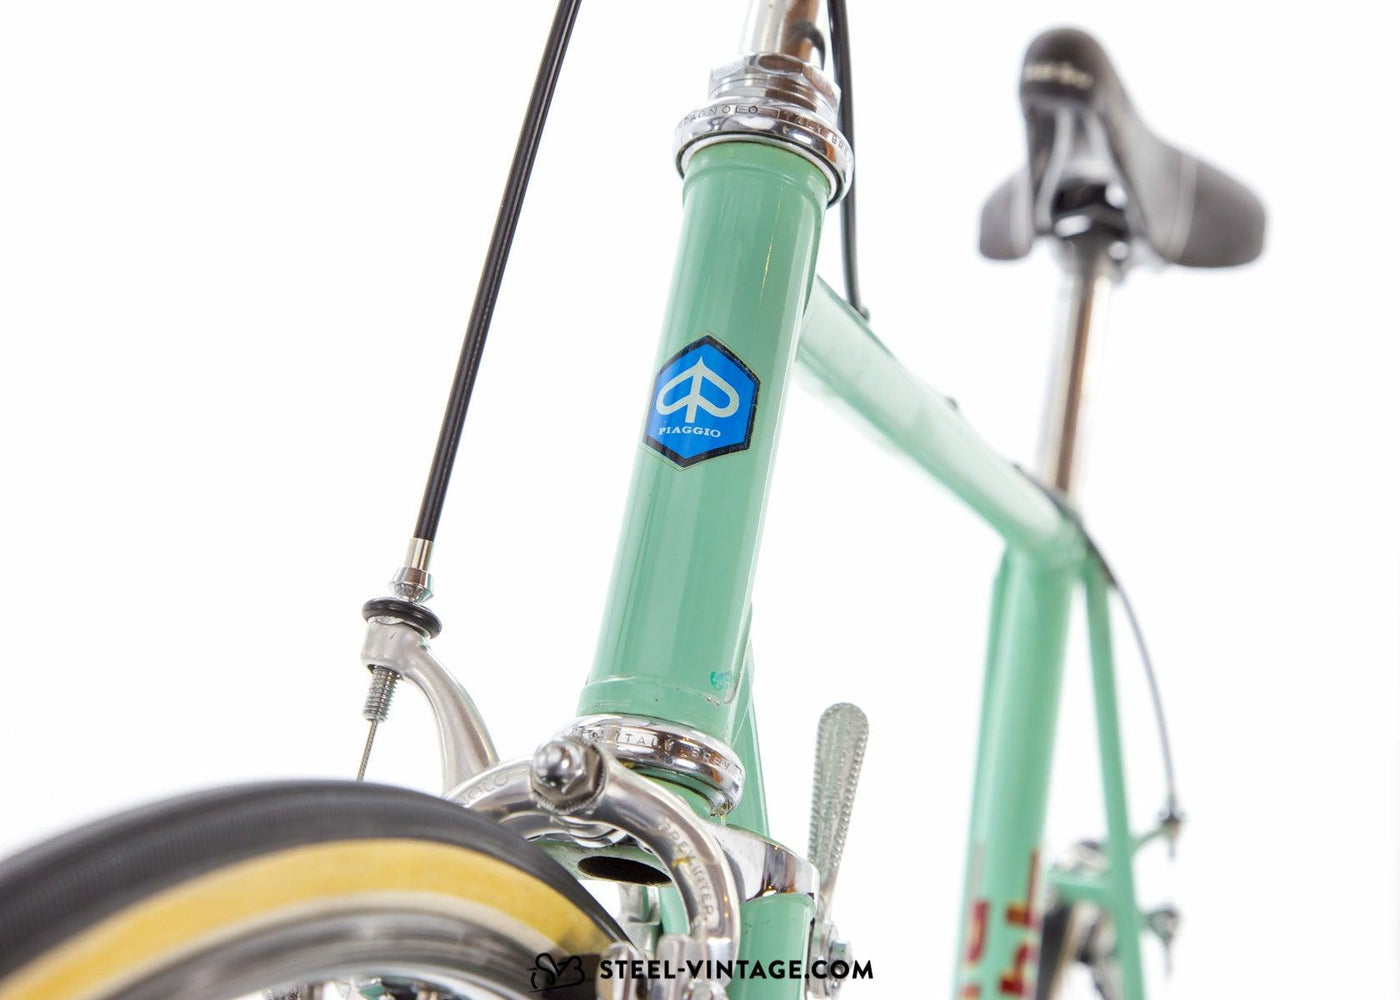 Bianchi Campione del Mondo 12V Classic Road Bike 1970s - Steel Vintage Bikes